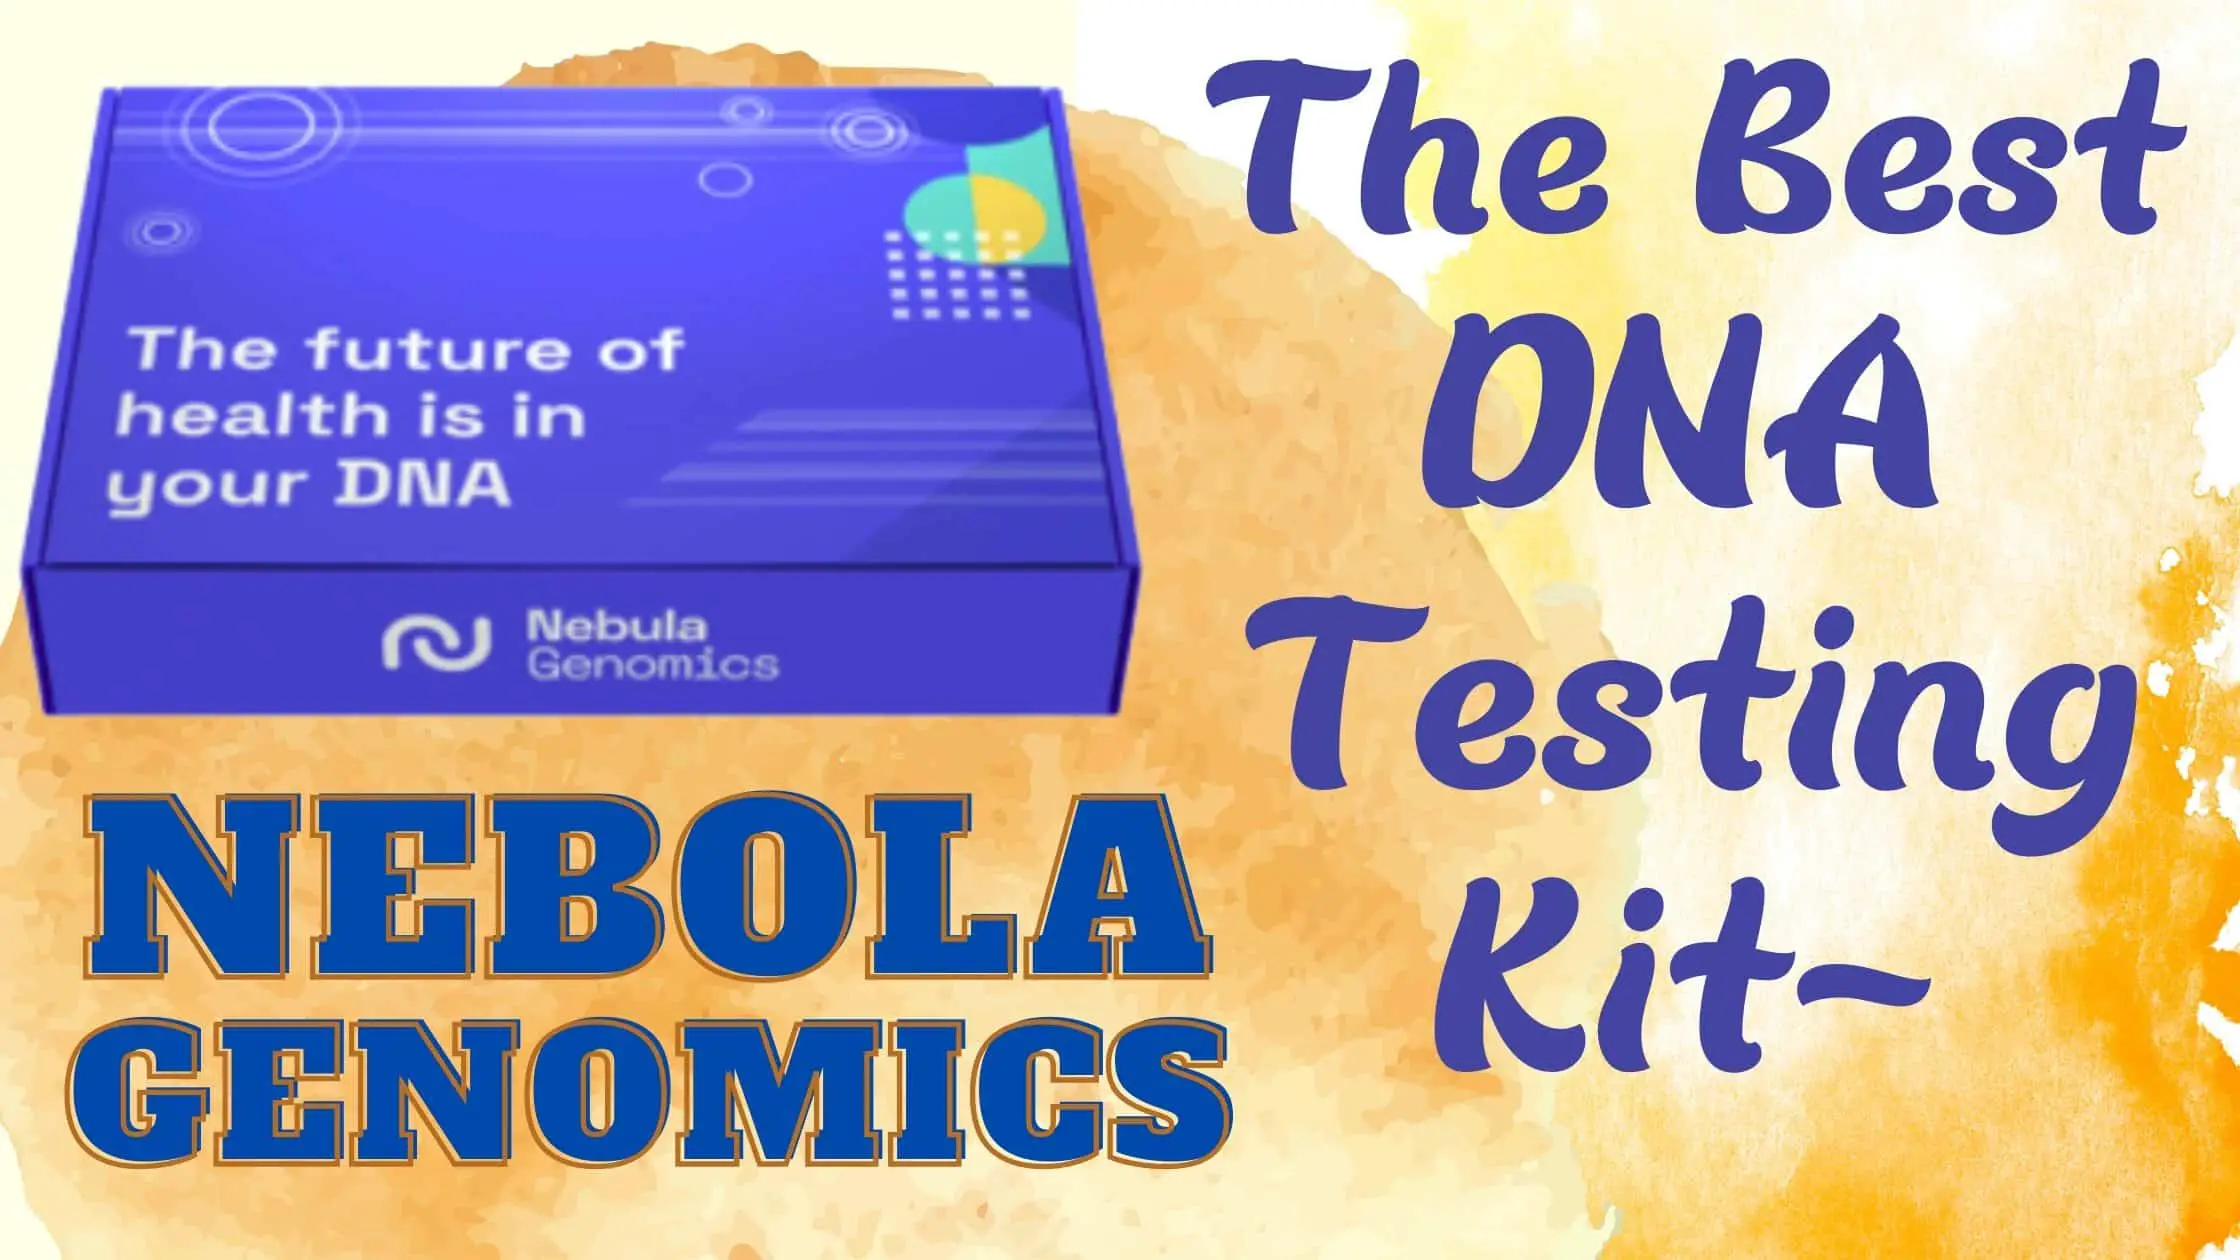 Nebula, the best DNA test